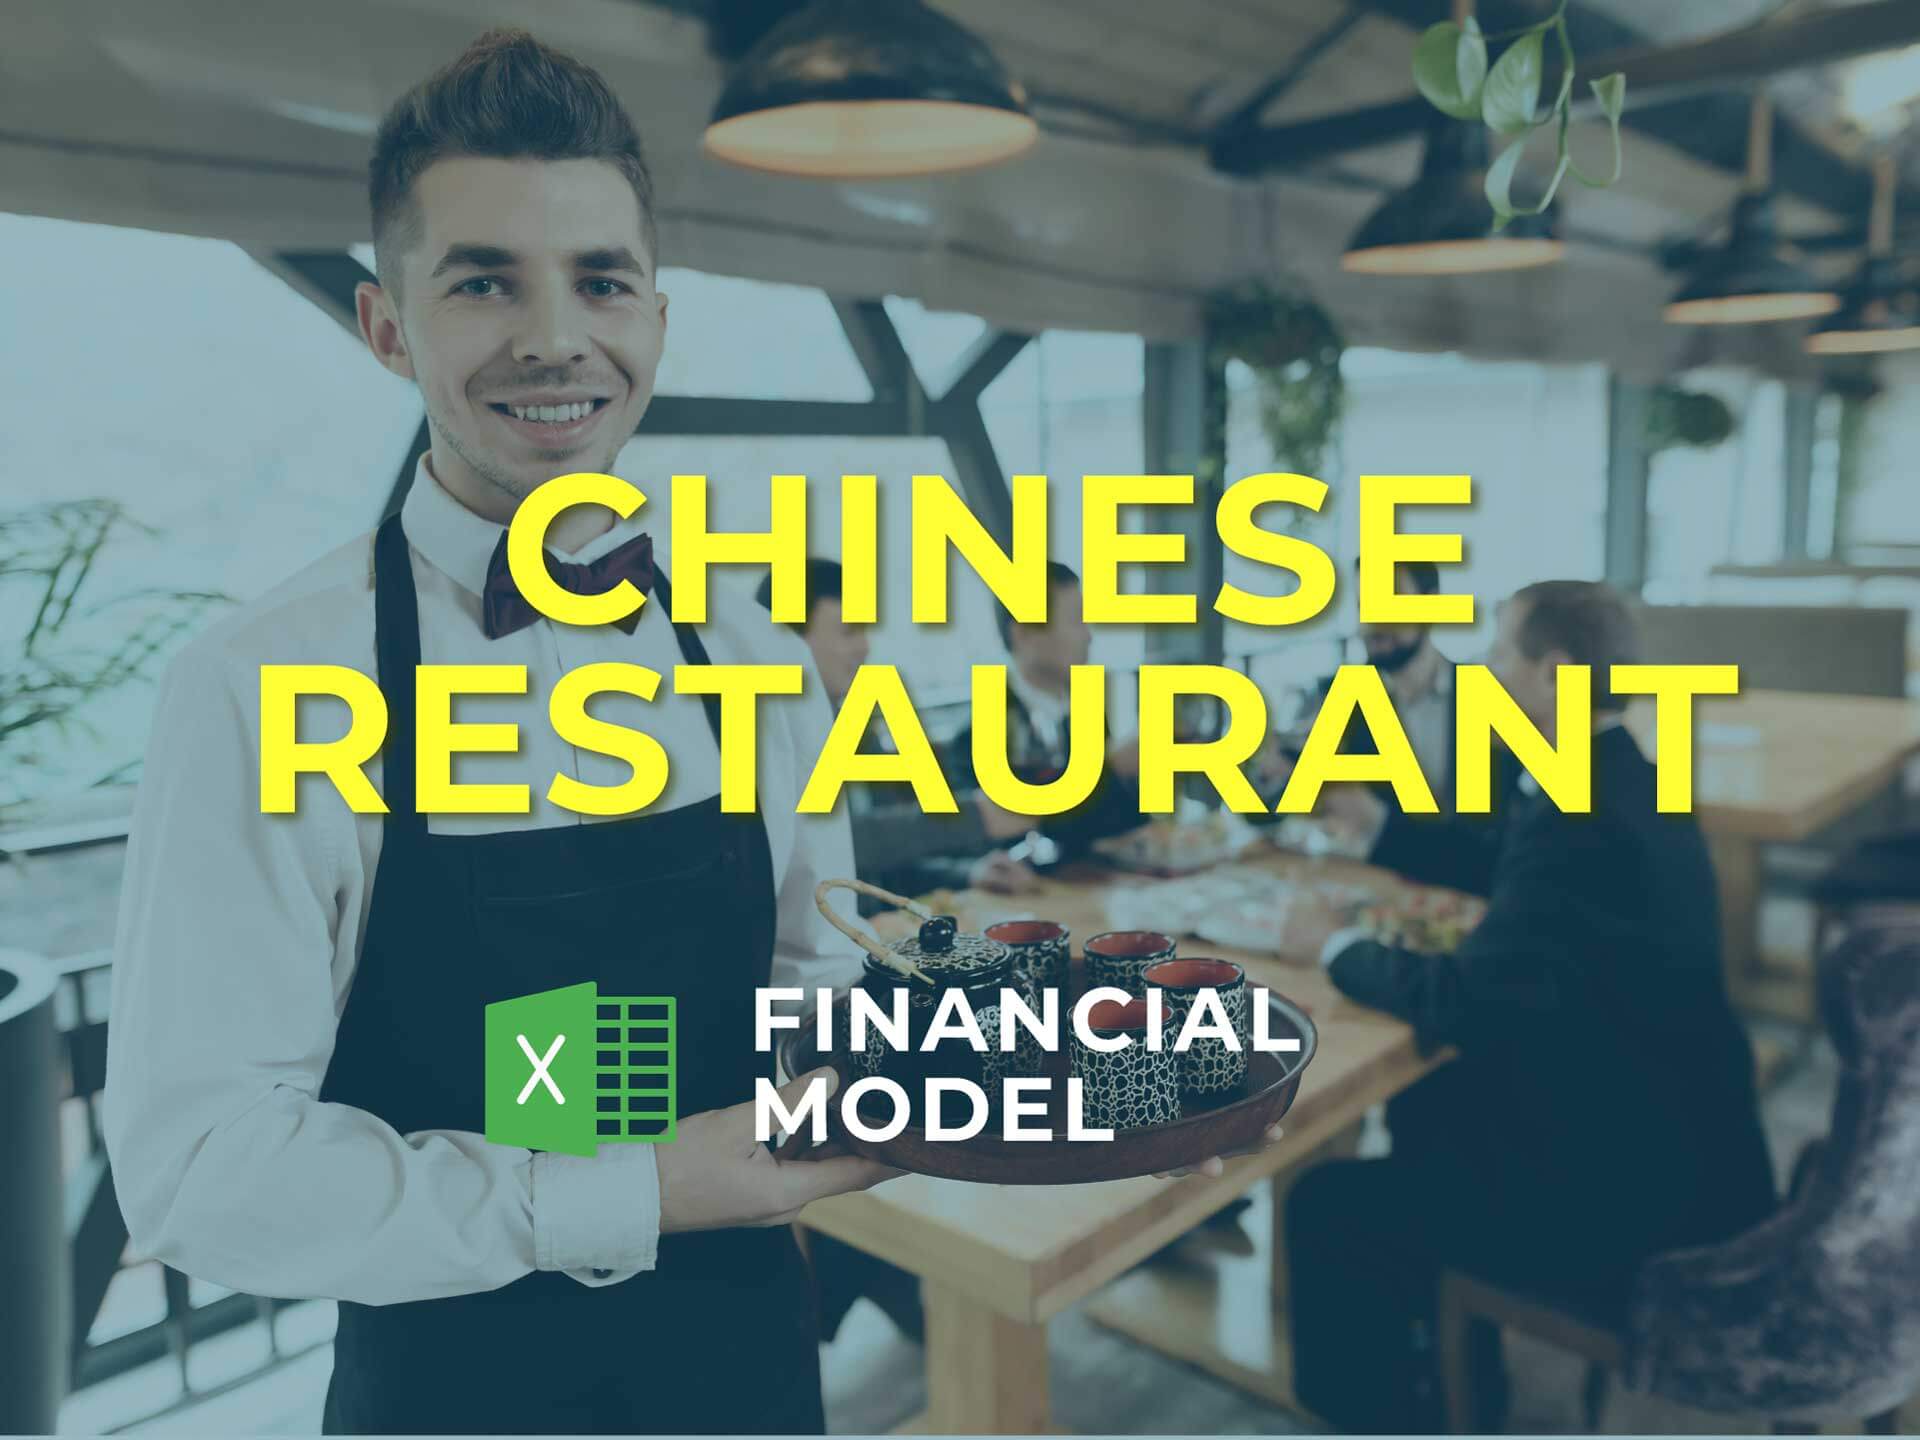 chinese restaurant business plan